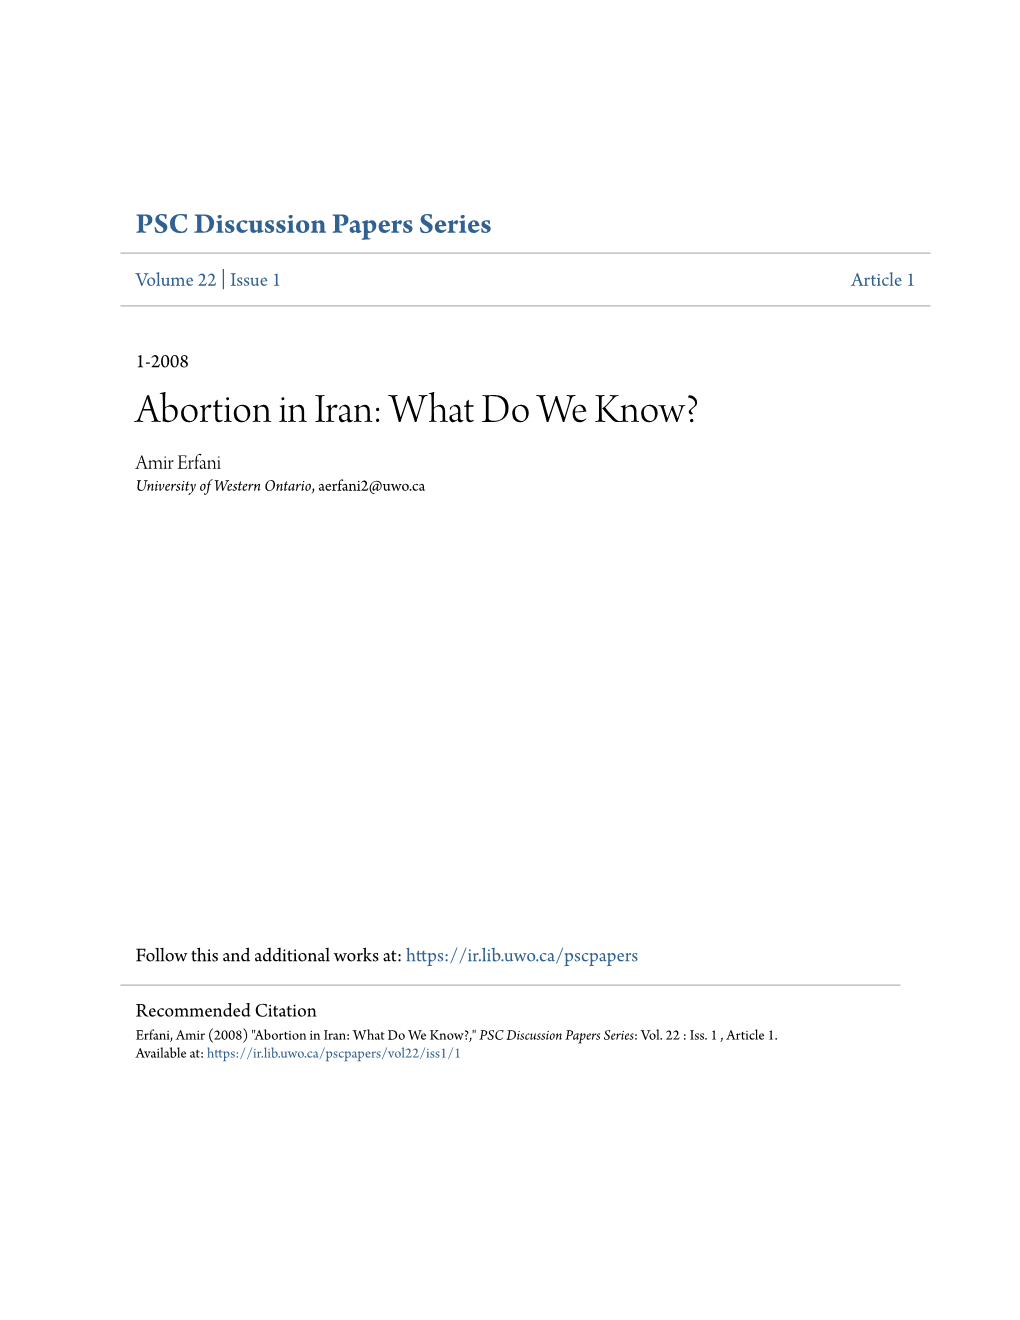 Abortion in Iran: What Do We Know? Amir Erfani University of Western Ontario, Aerfani2@Uwo.Ca